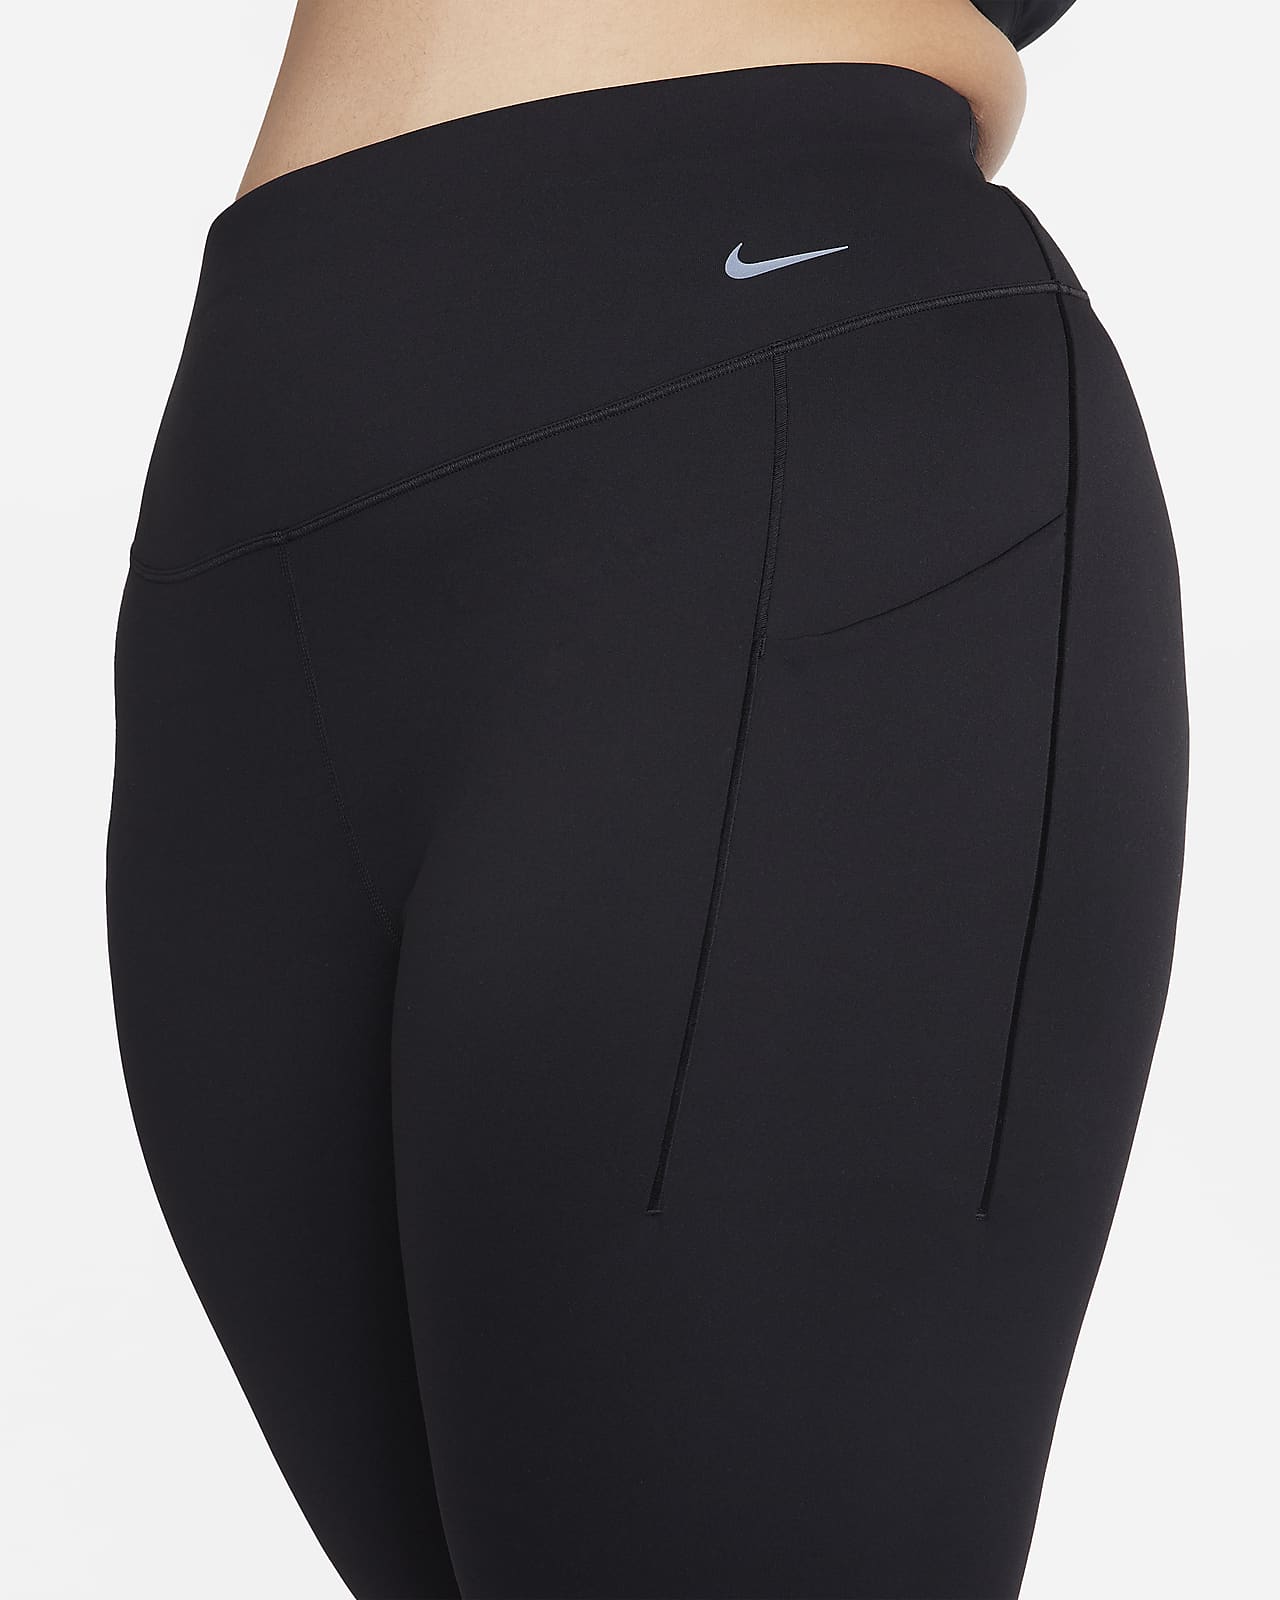 Nike Womens Sportswear Leggings 7 8 Black Womens Clothing - Shop